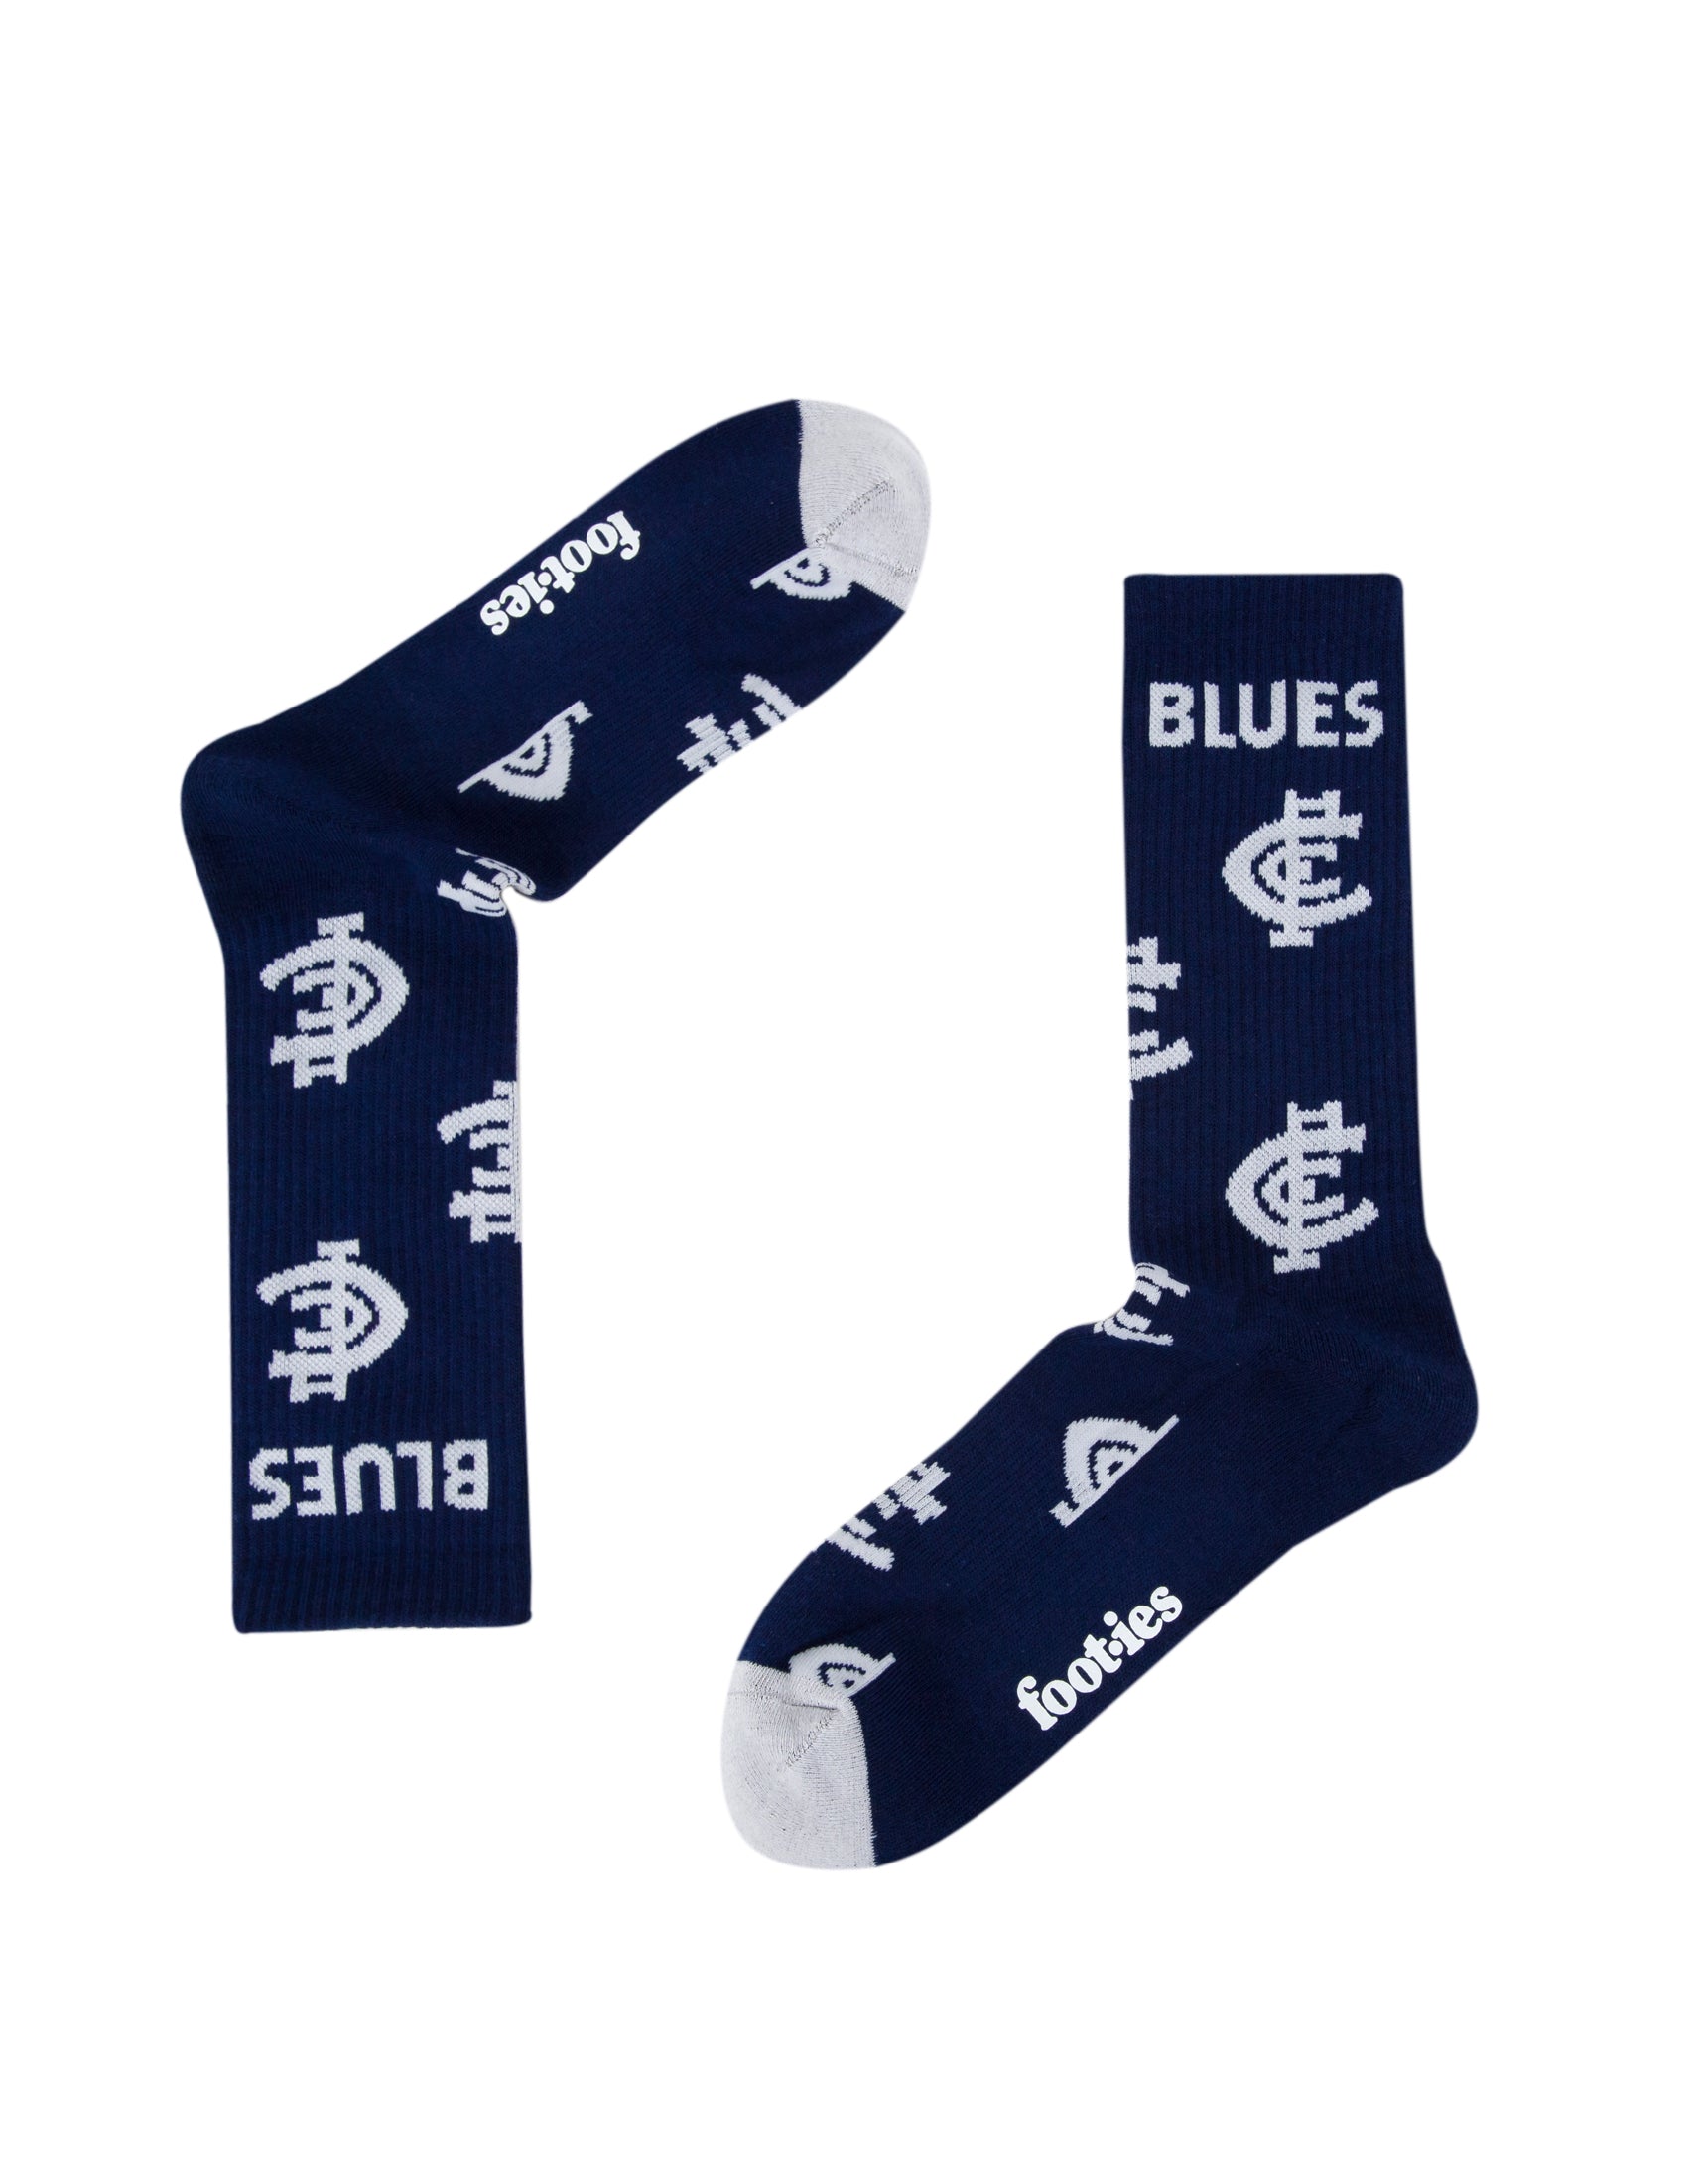 Carlton Blues Mascot Sneaker 2 Pack Socks